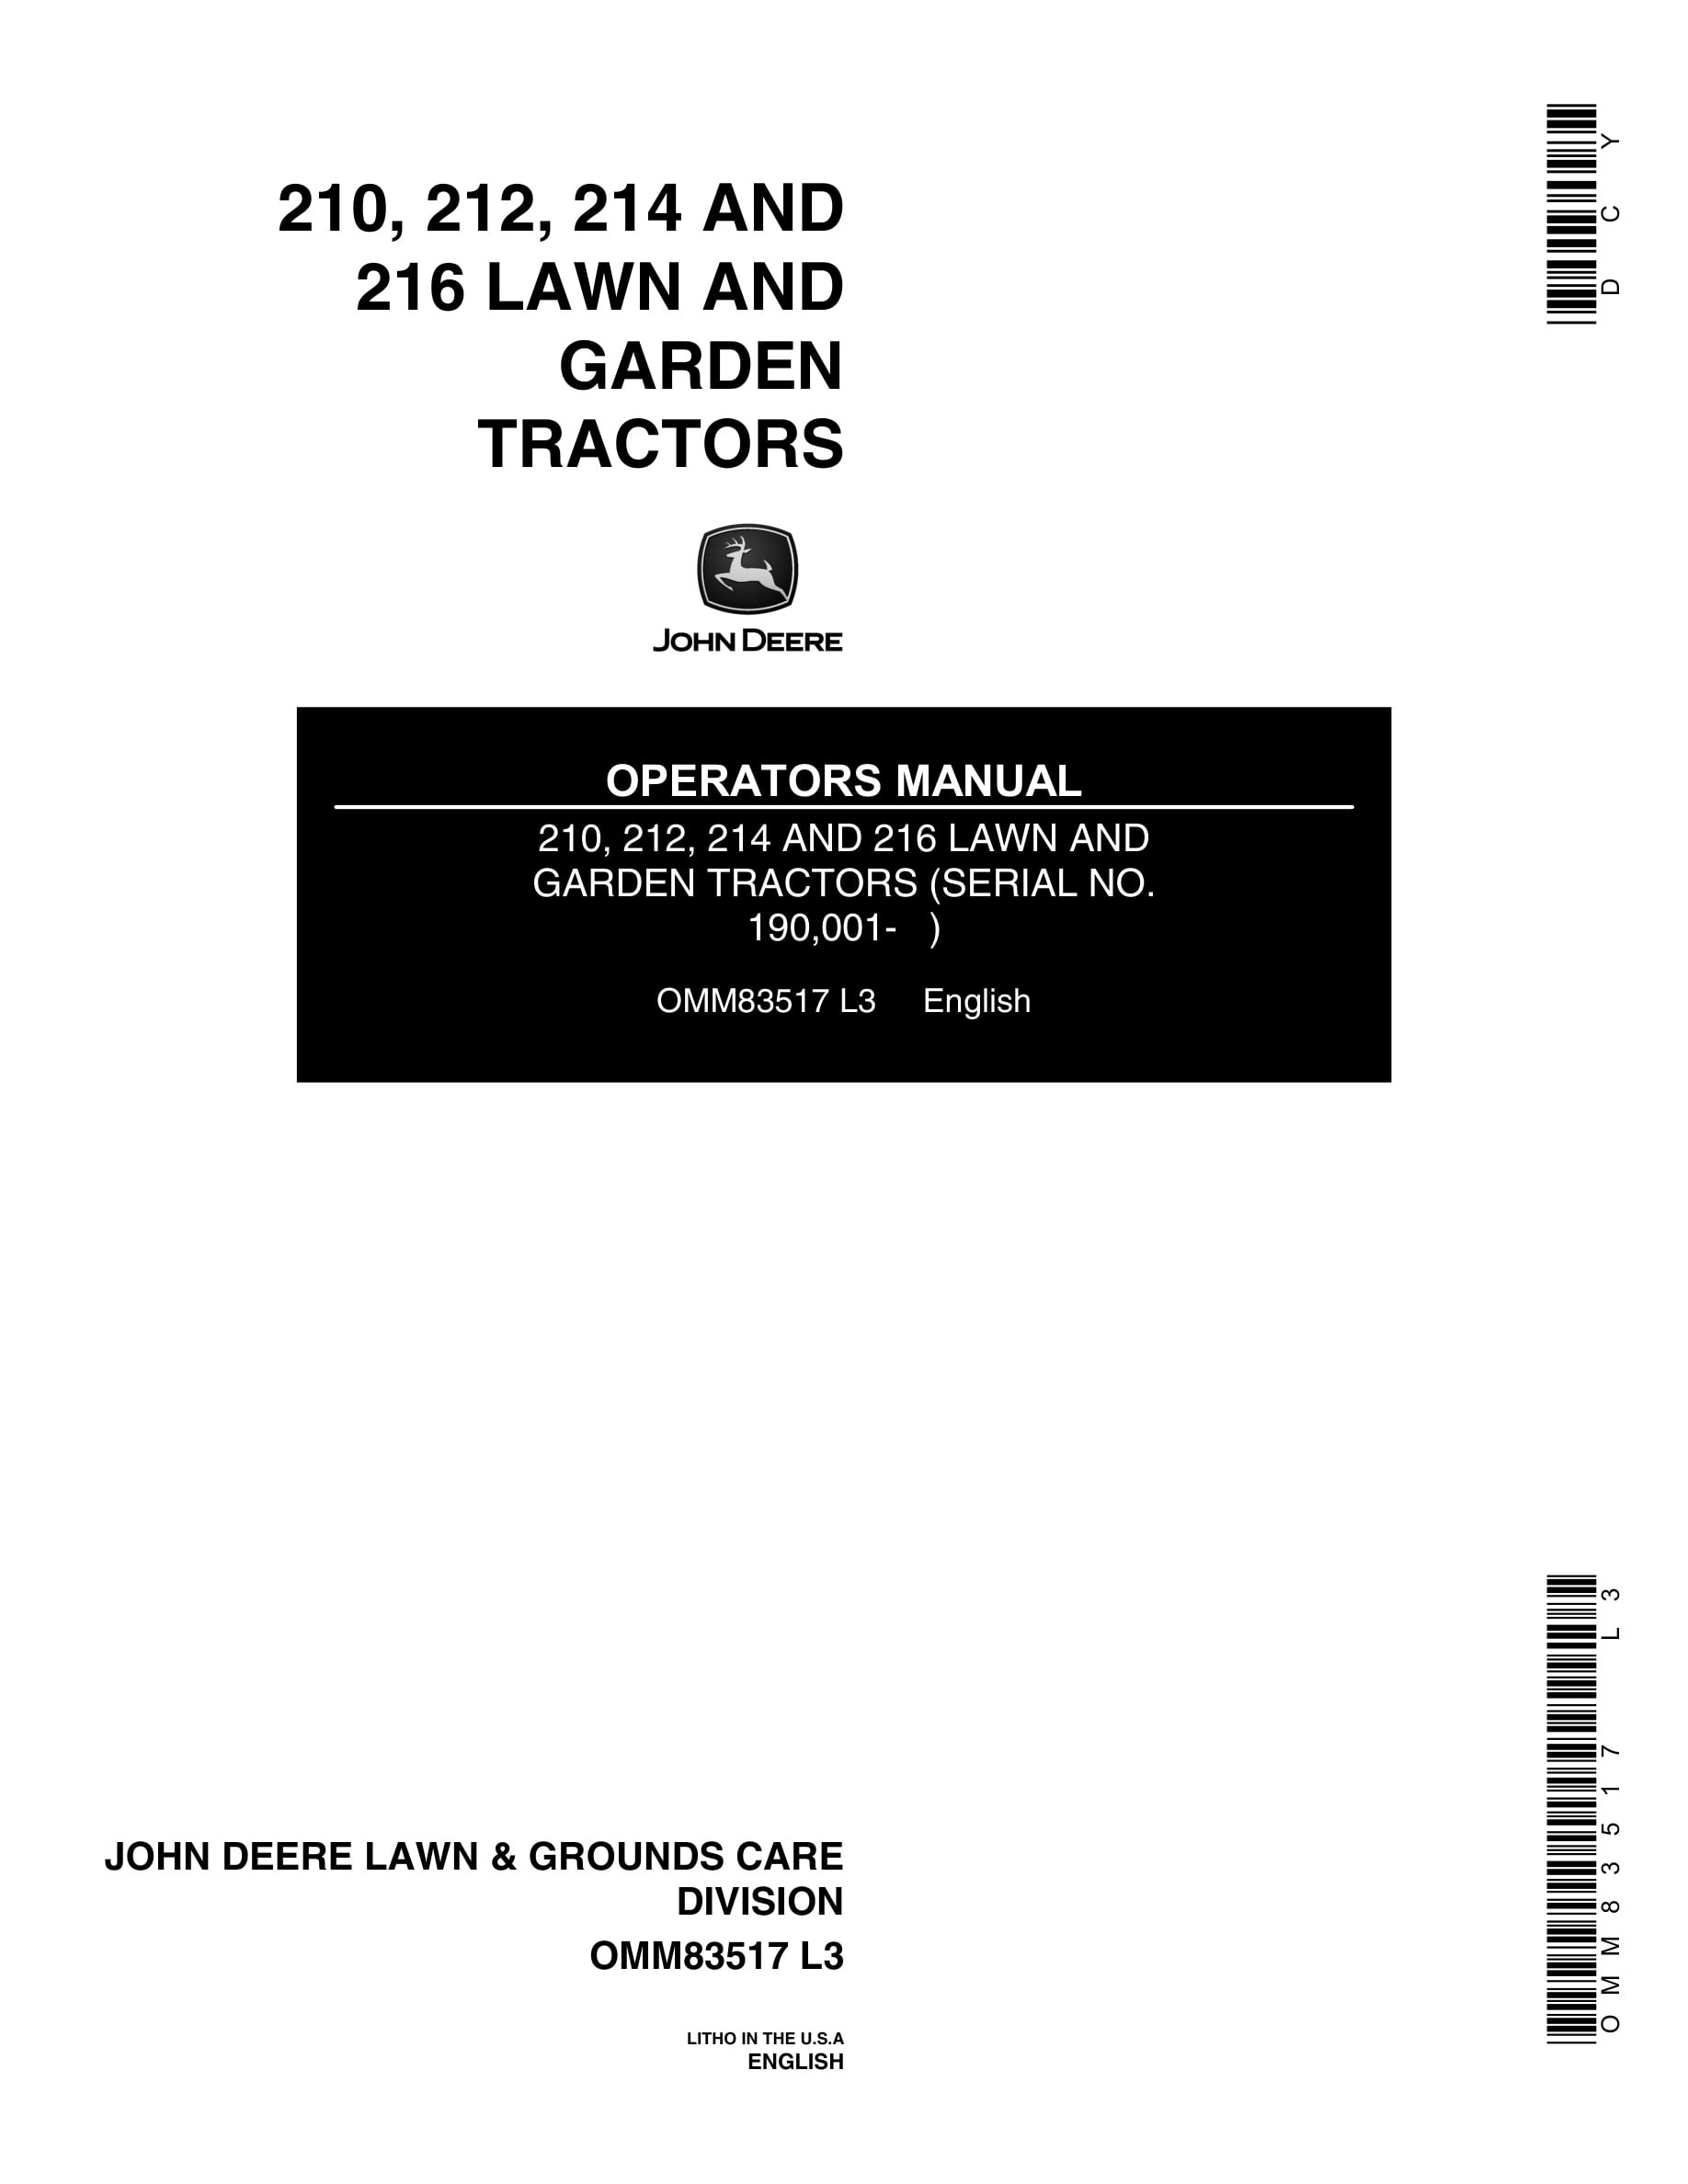 John Deere 210, 212, 214 AND 216 Tractor Operator Manual OMM83517-1